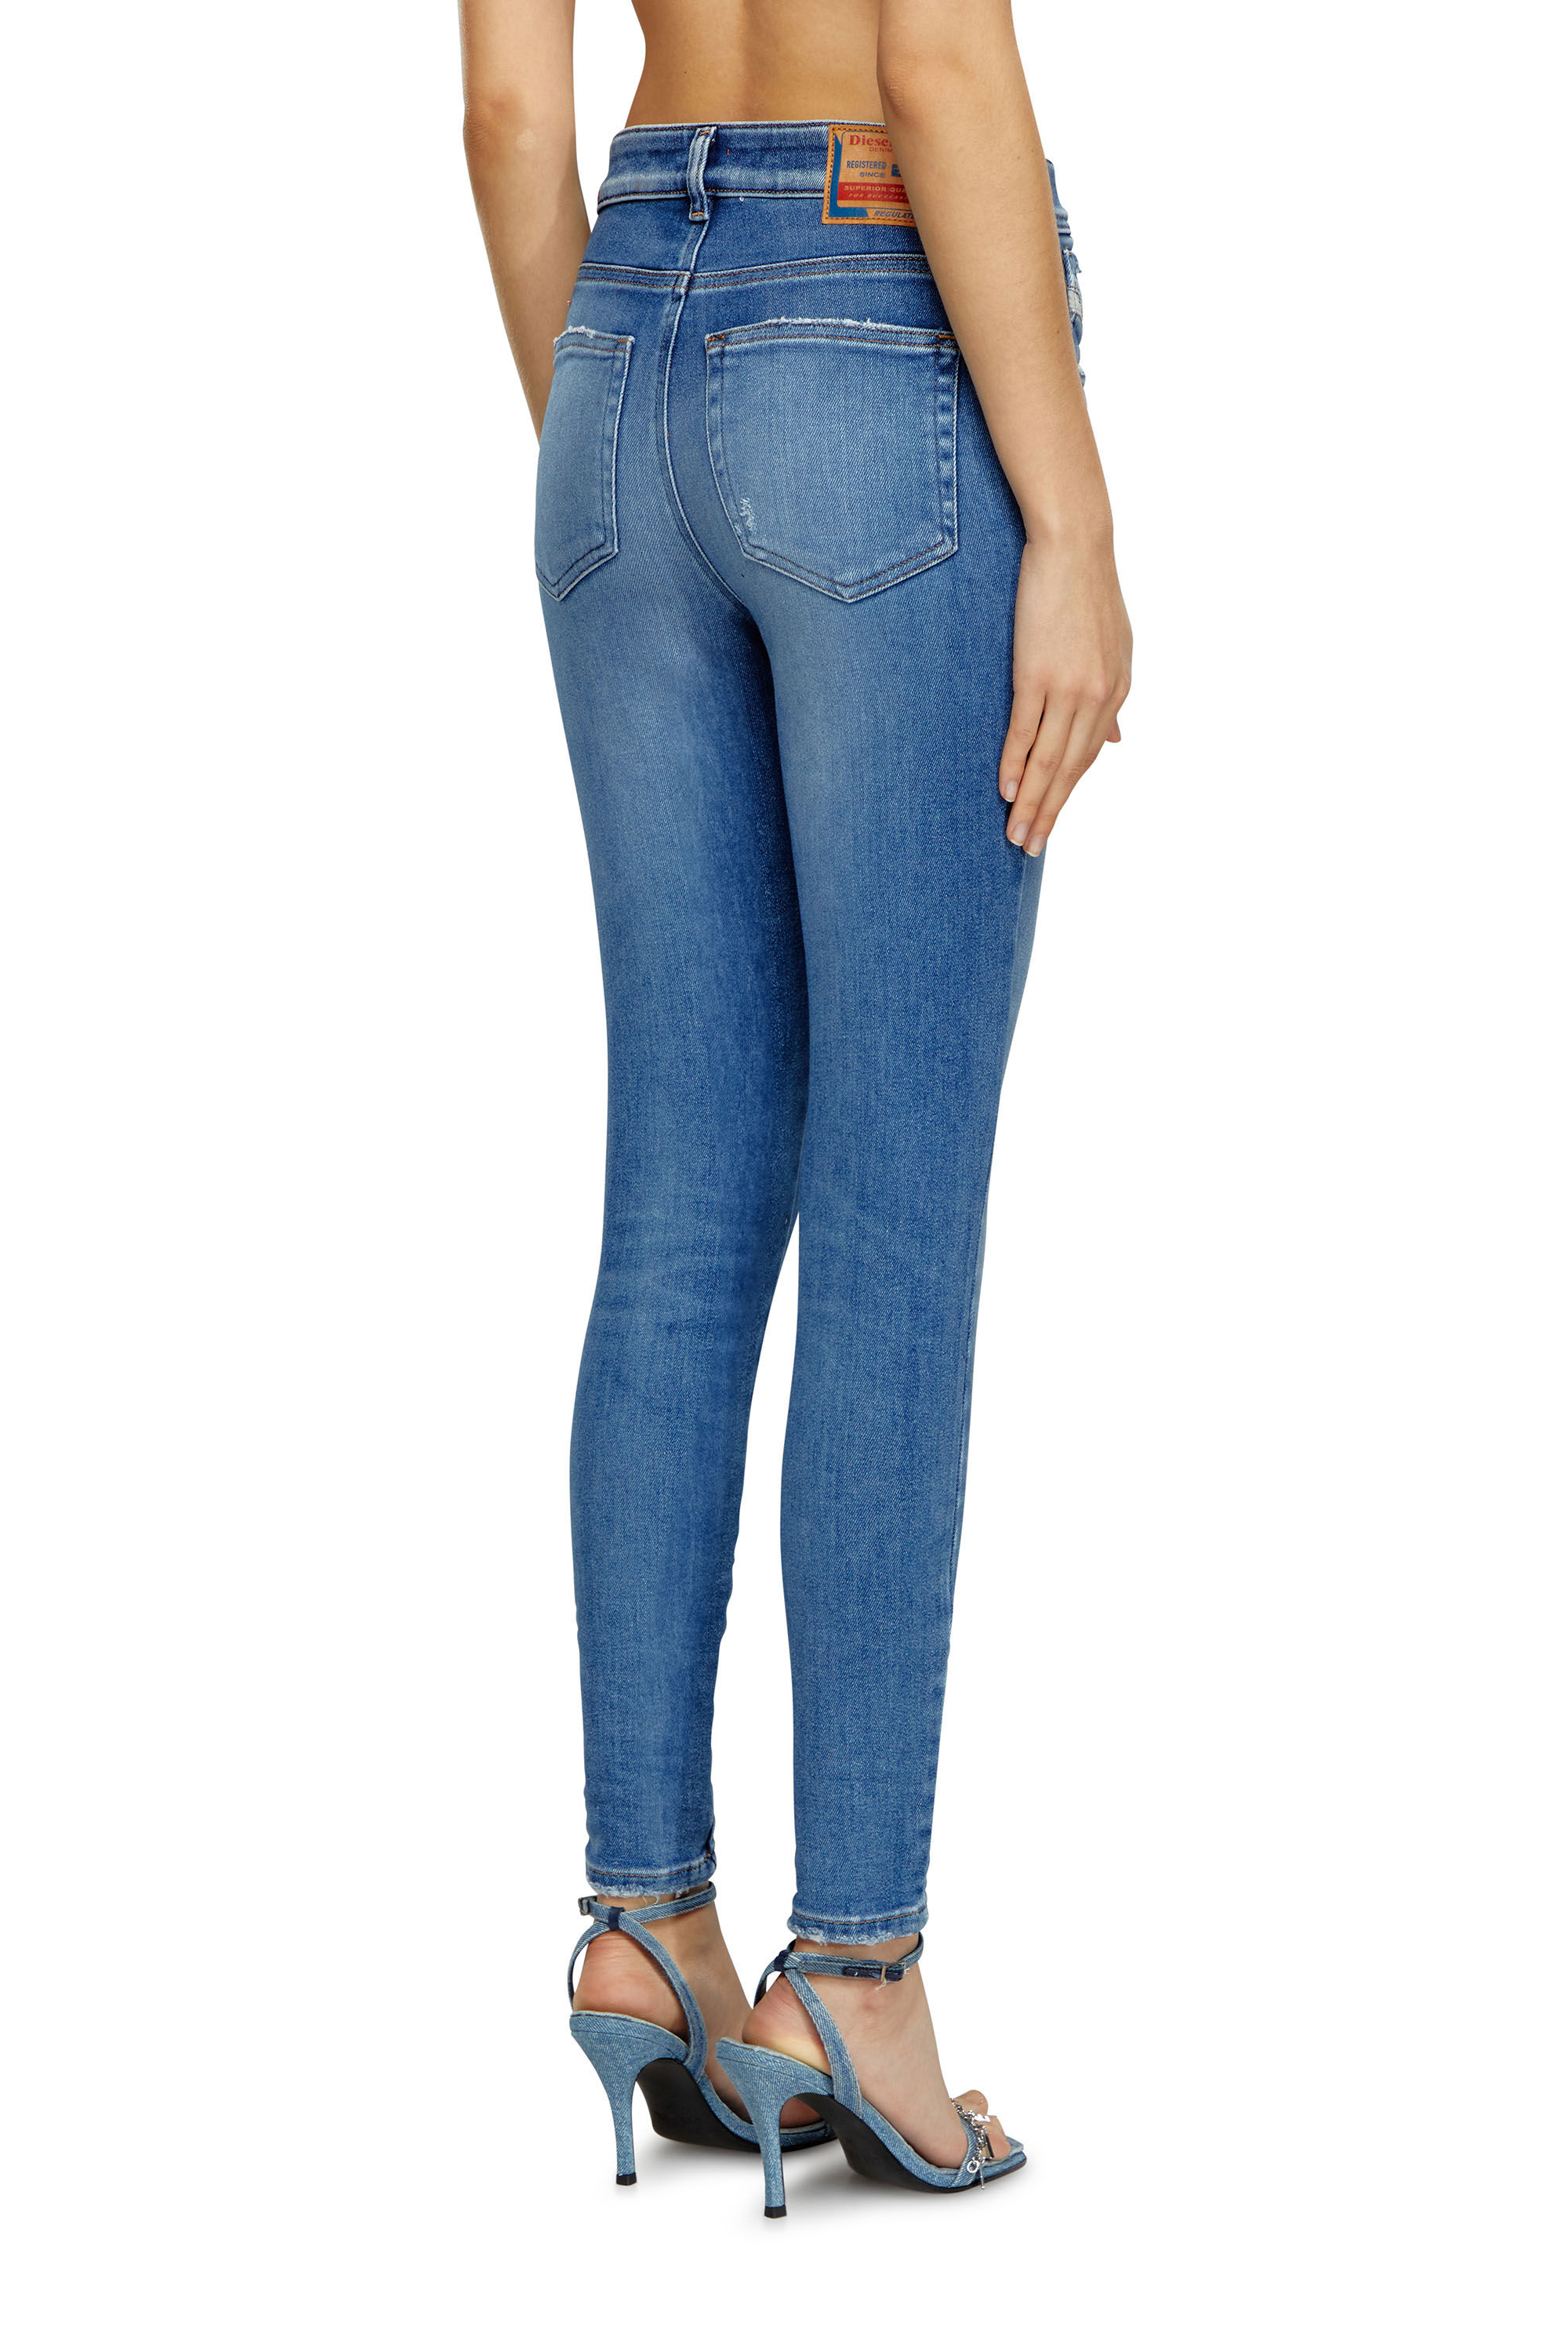 Women's Super skinny Jeans | Medium blue | Diesel 1984 Slandy-High